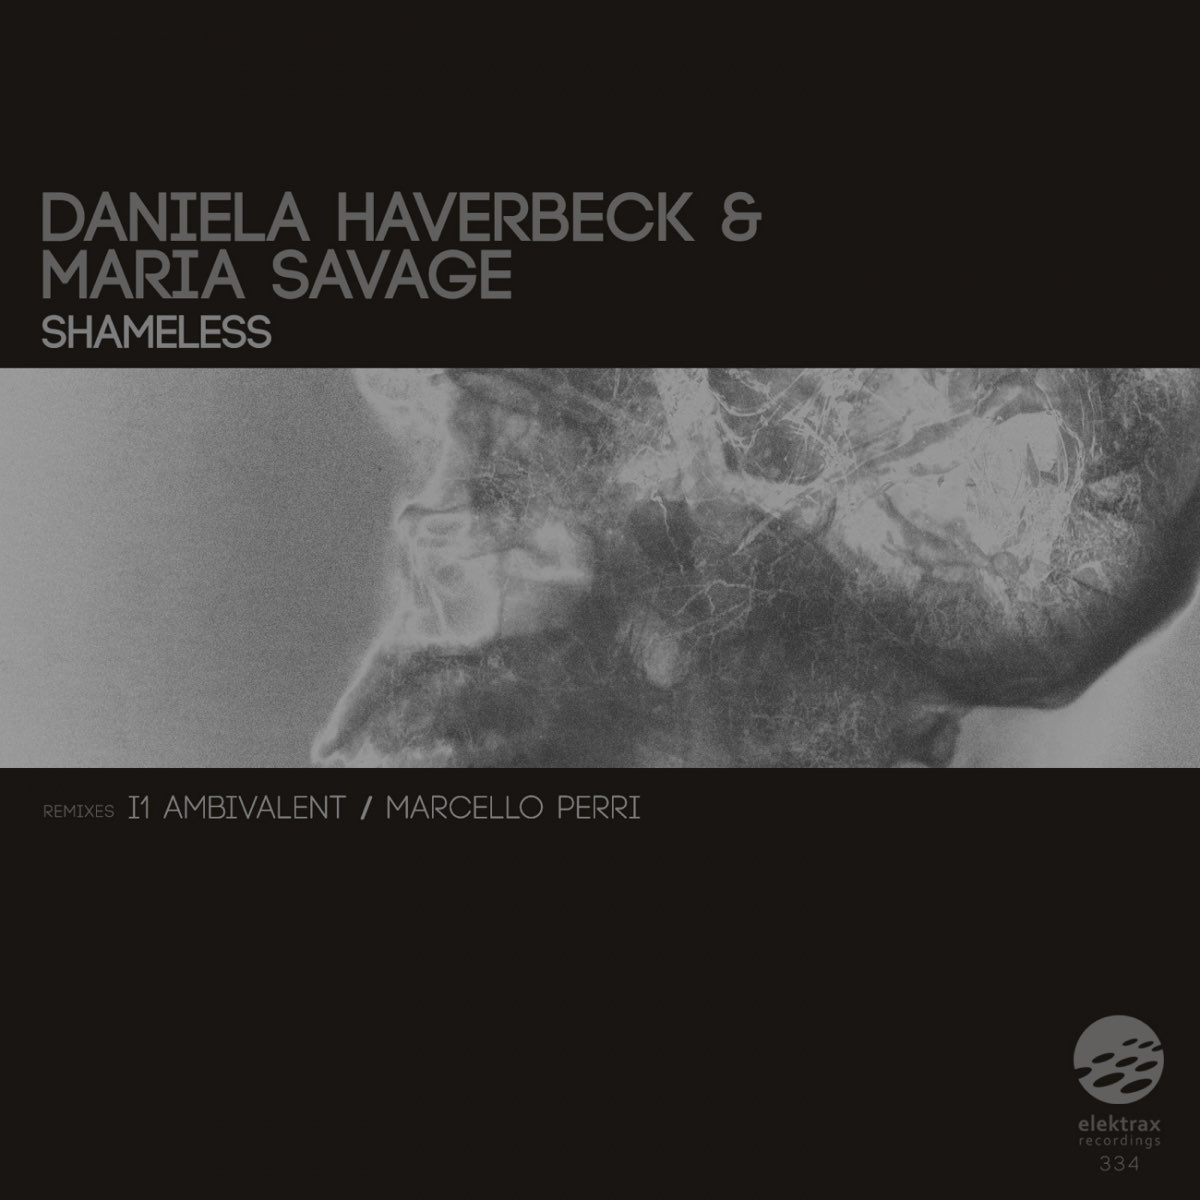 Daniela Haverbeck. Shameless альбом.